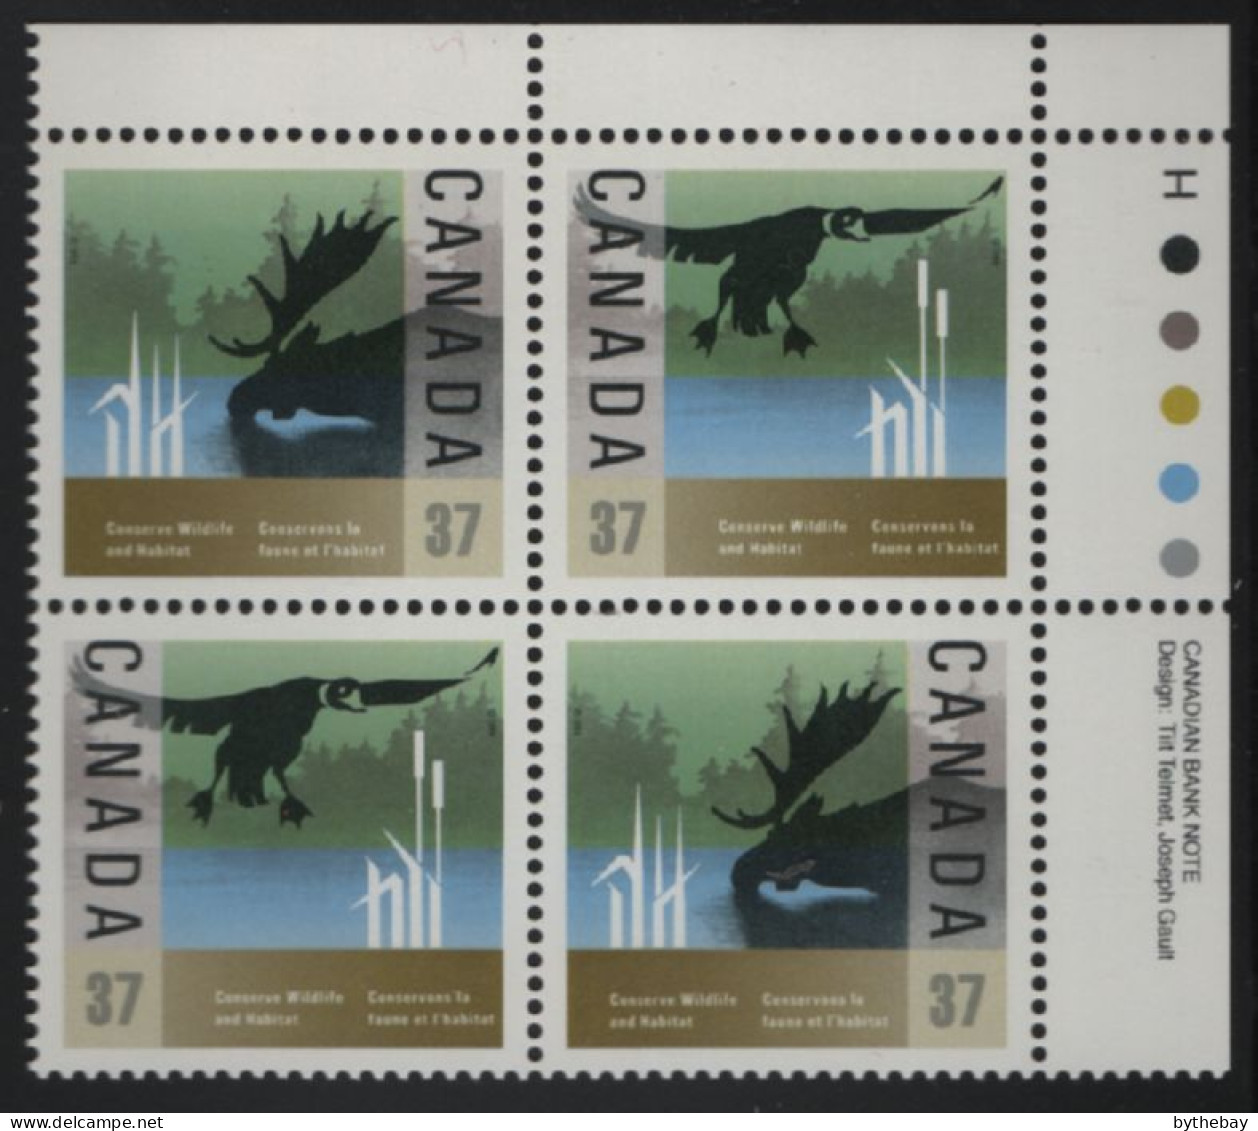 Canada 1988 MNH Sc 1205a 37c Duck, Moose UR Plate Block - Plate Number & Inscriptions